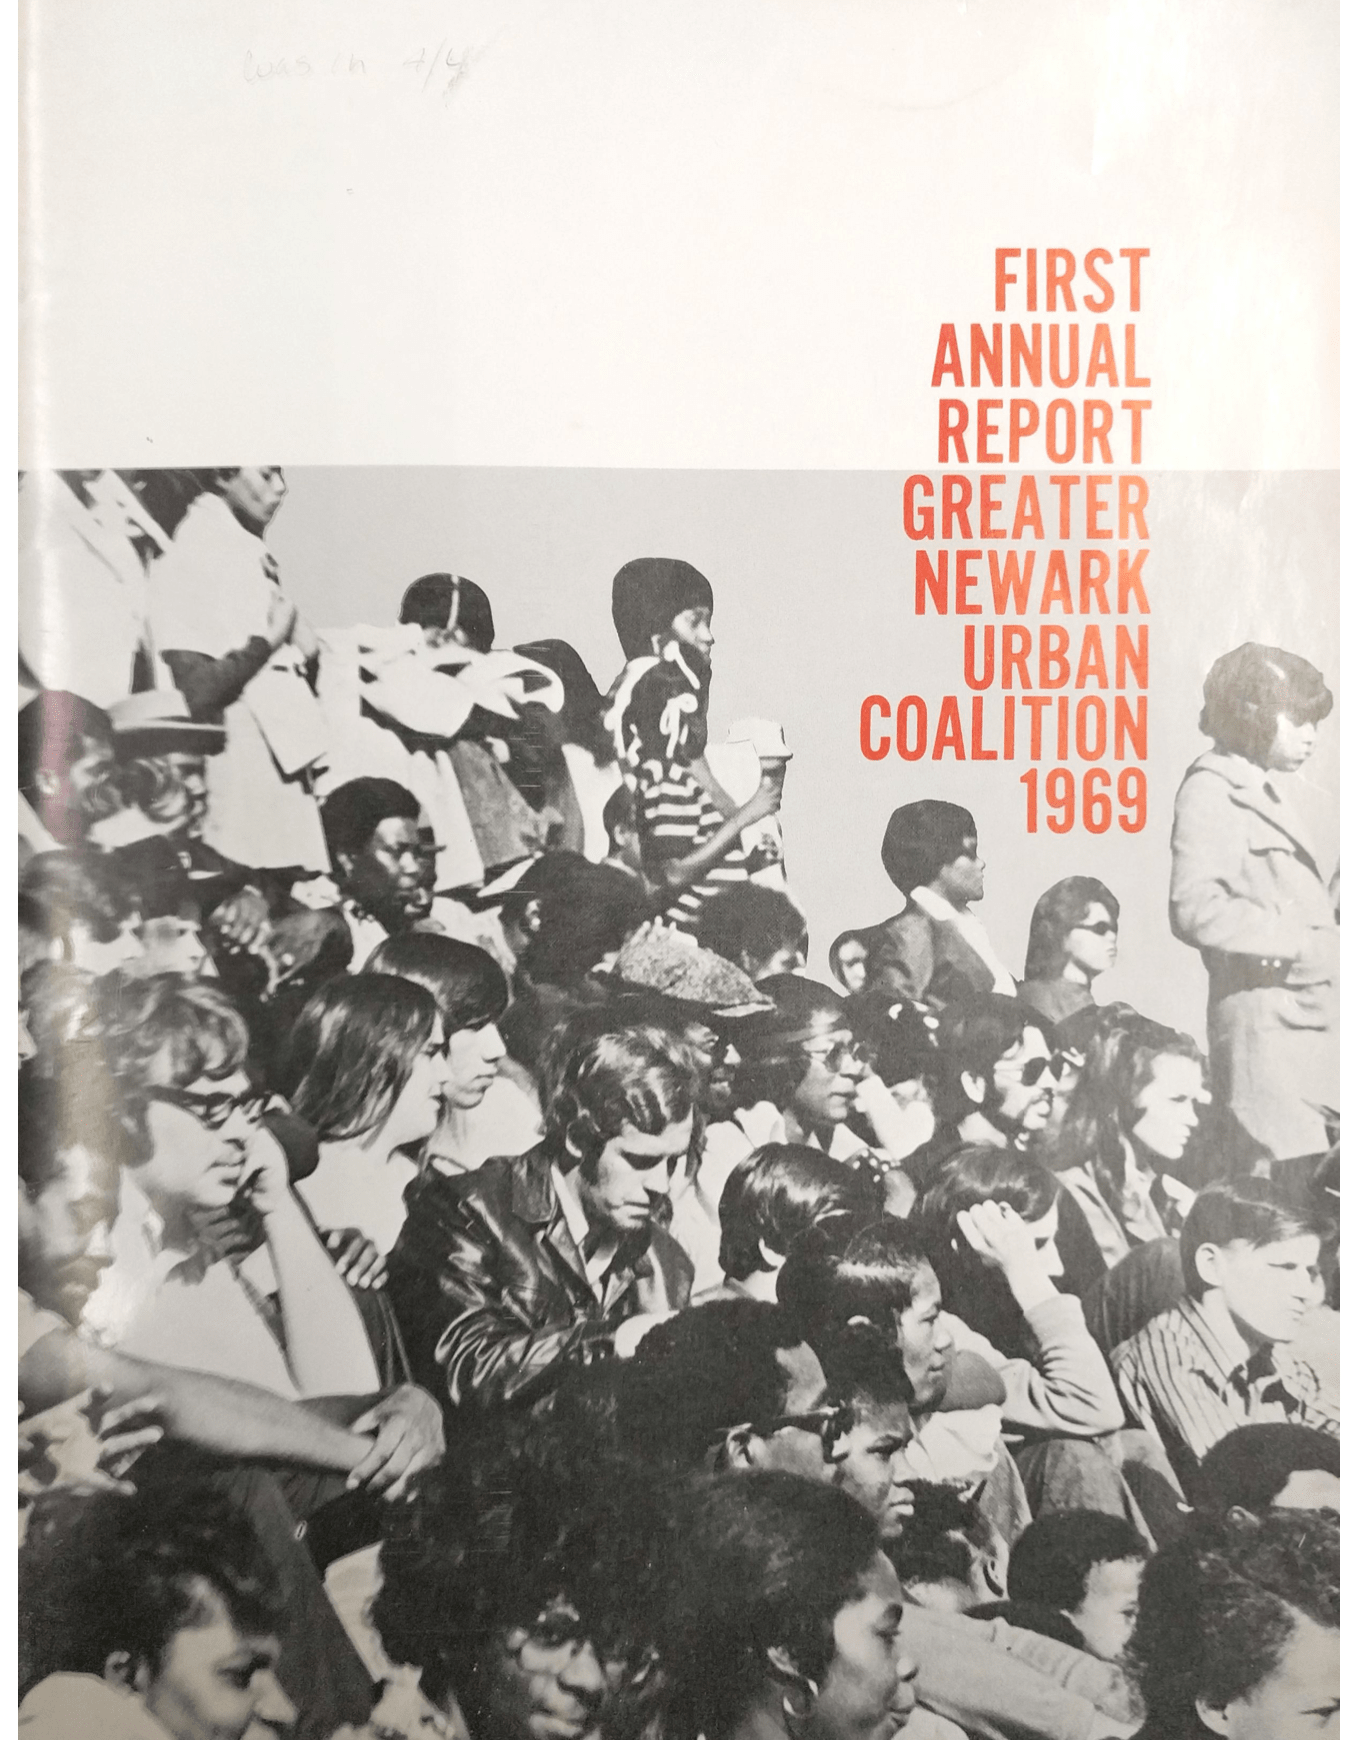 Greater Newark Urban Coalition Annual Report (1969)